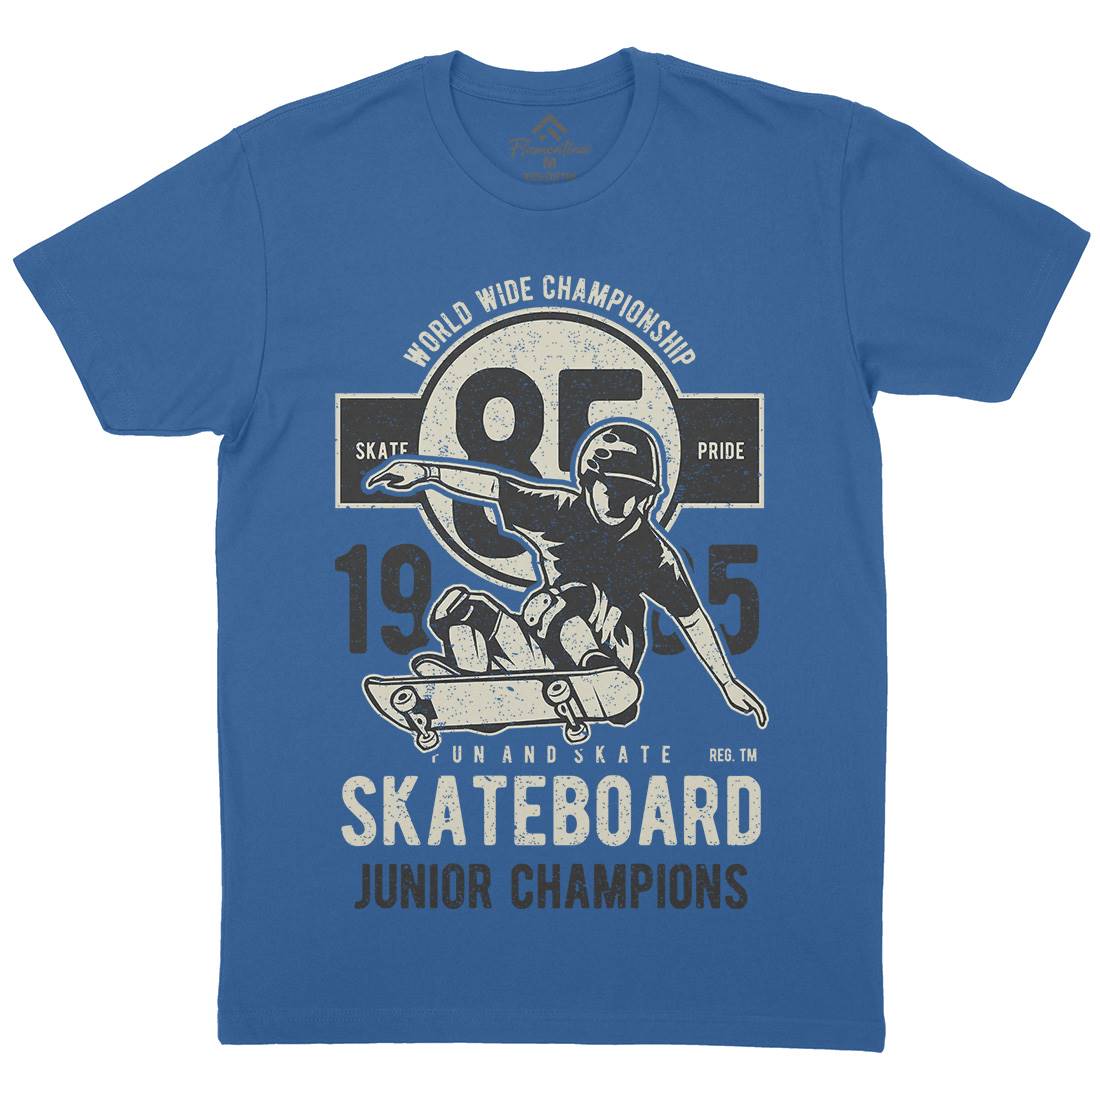 Skateboard Junior Champions Mens Crew Neck T-Shirt Skate A755